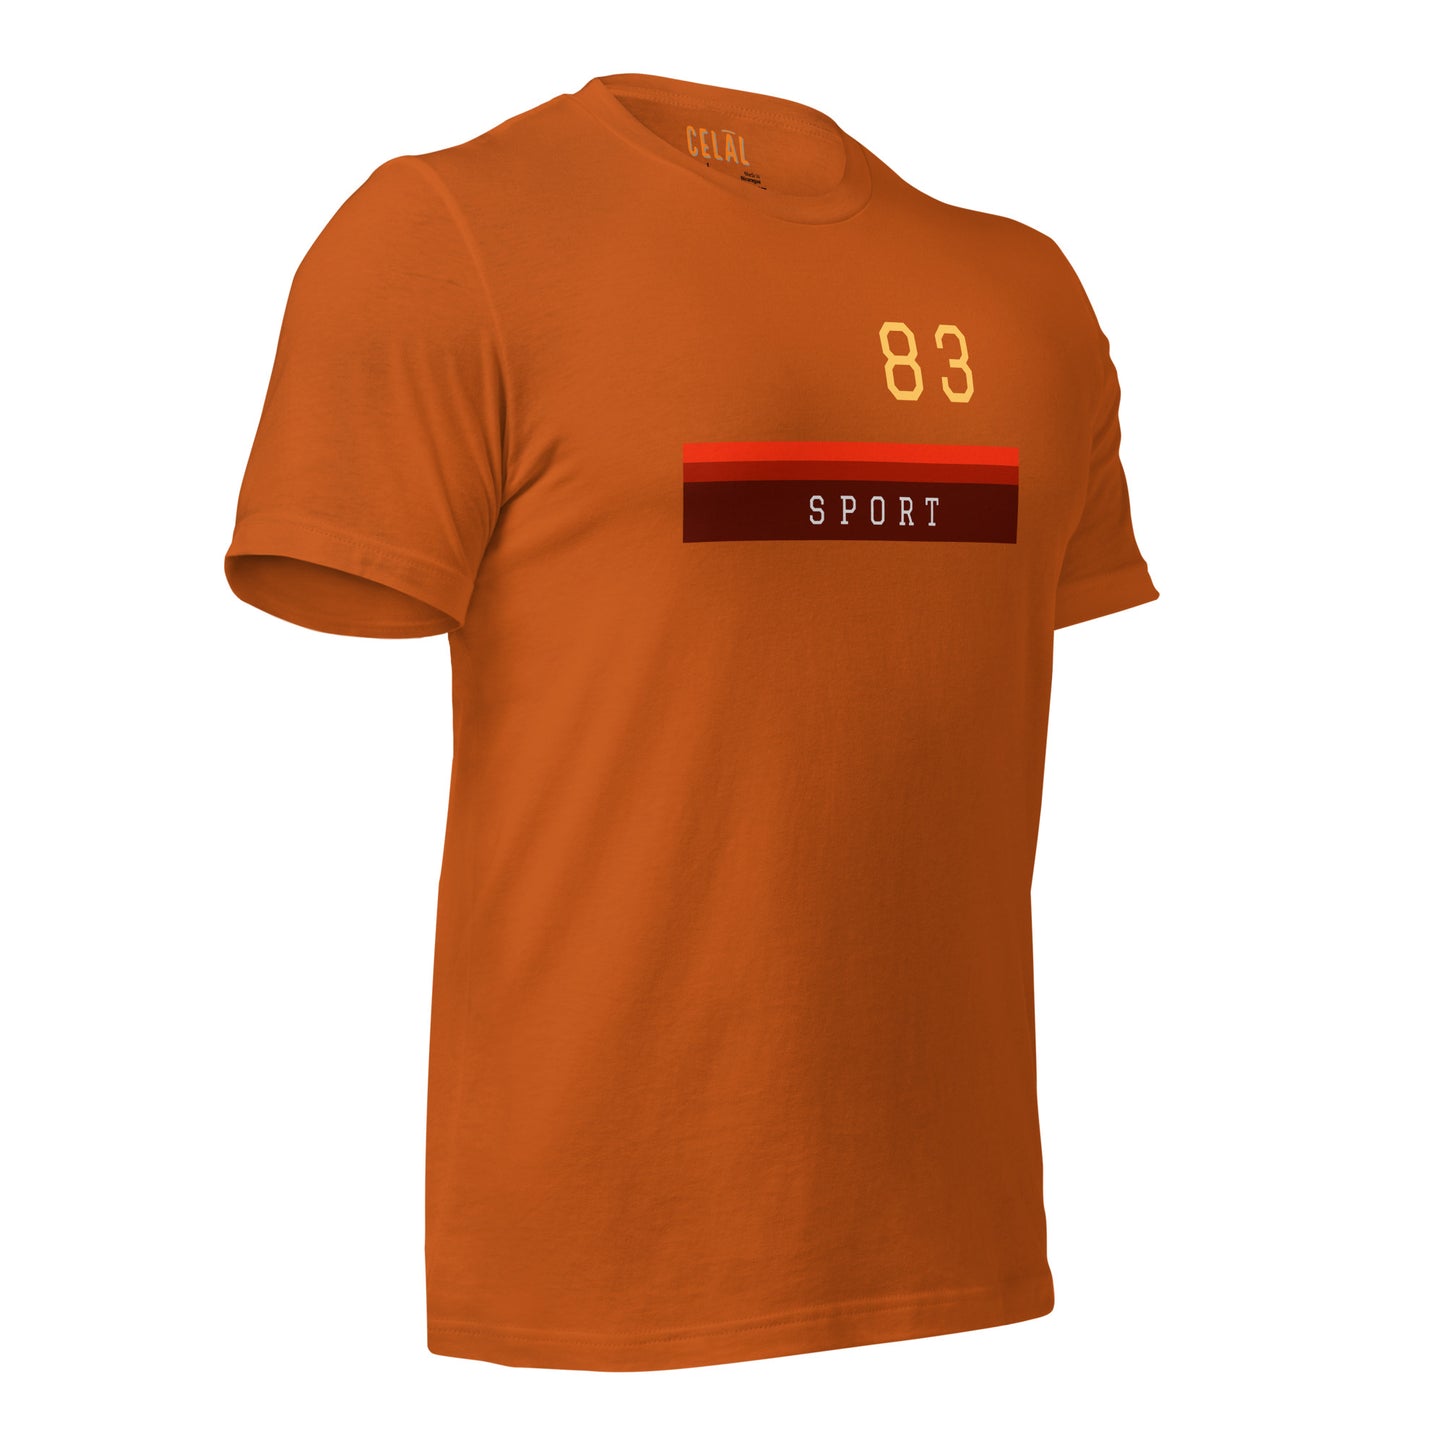 83 Unisex t-shirt